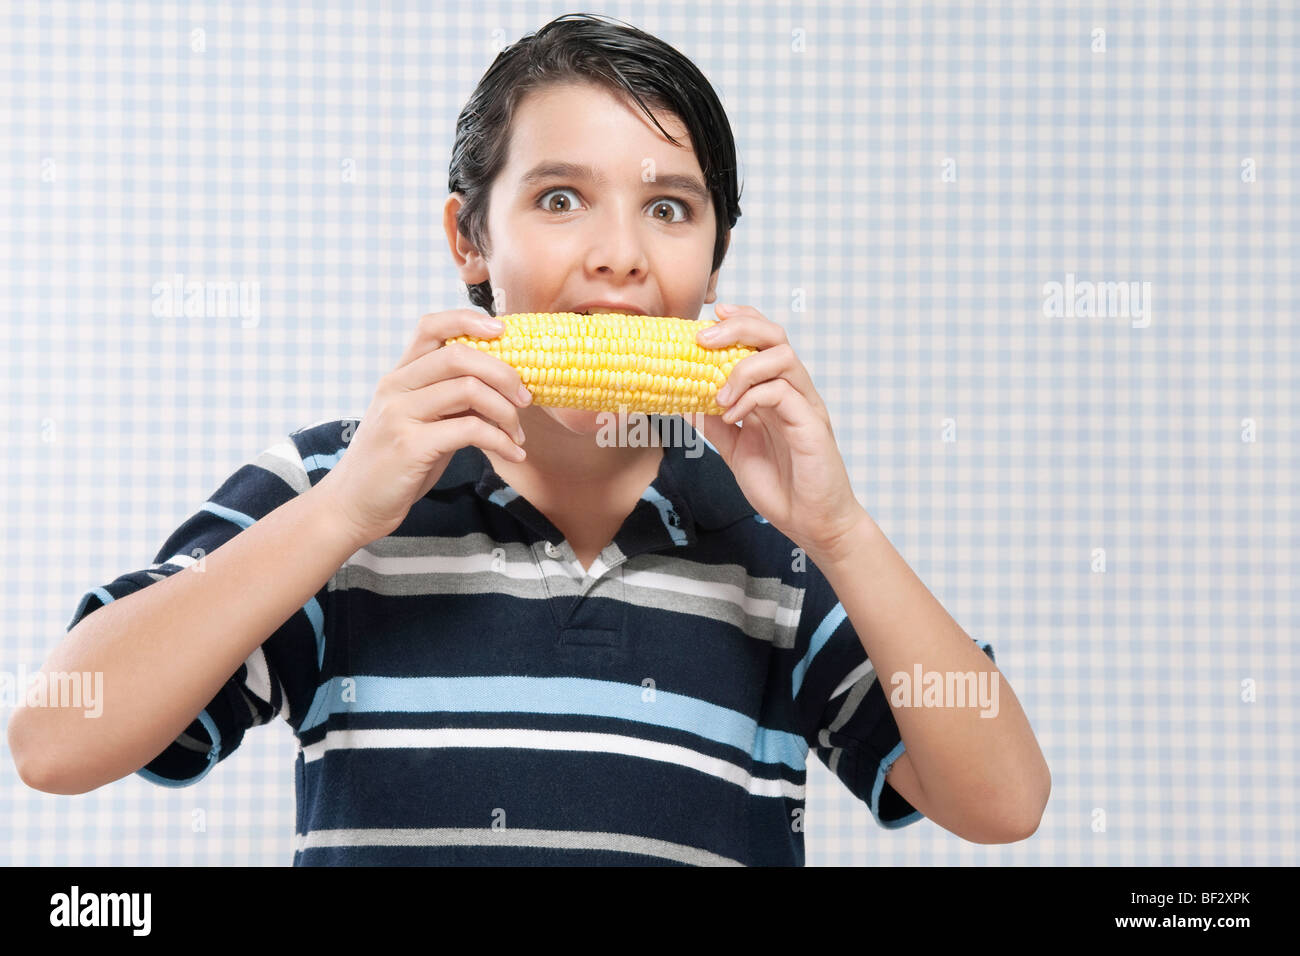 Boy eating corn on the cob Stock Photo